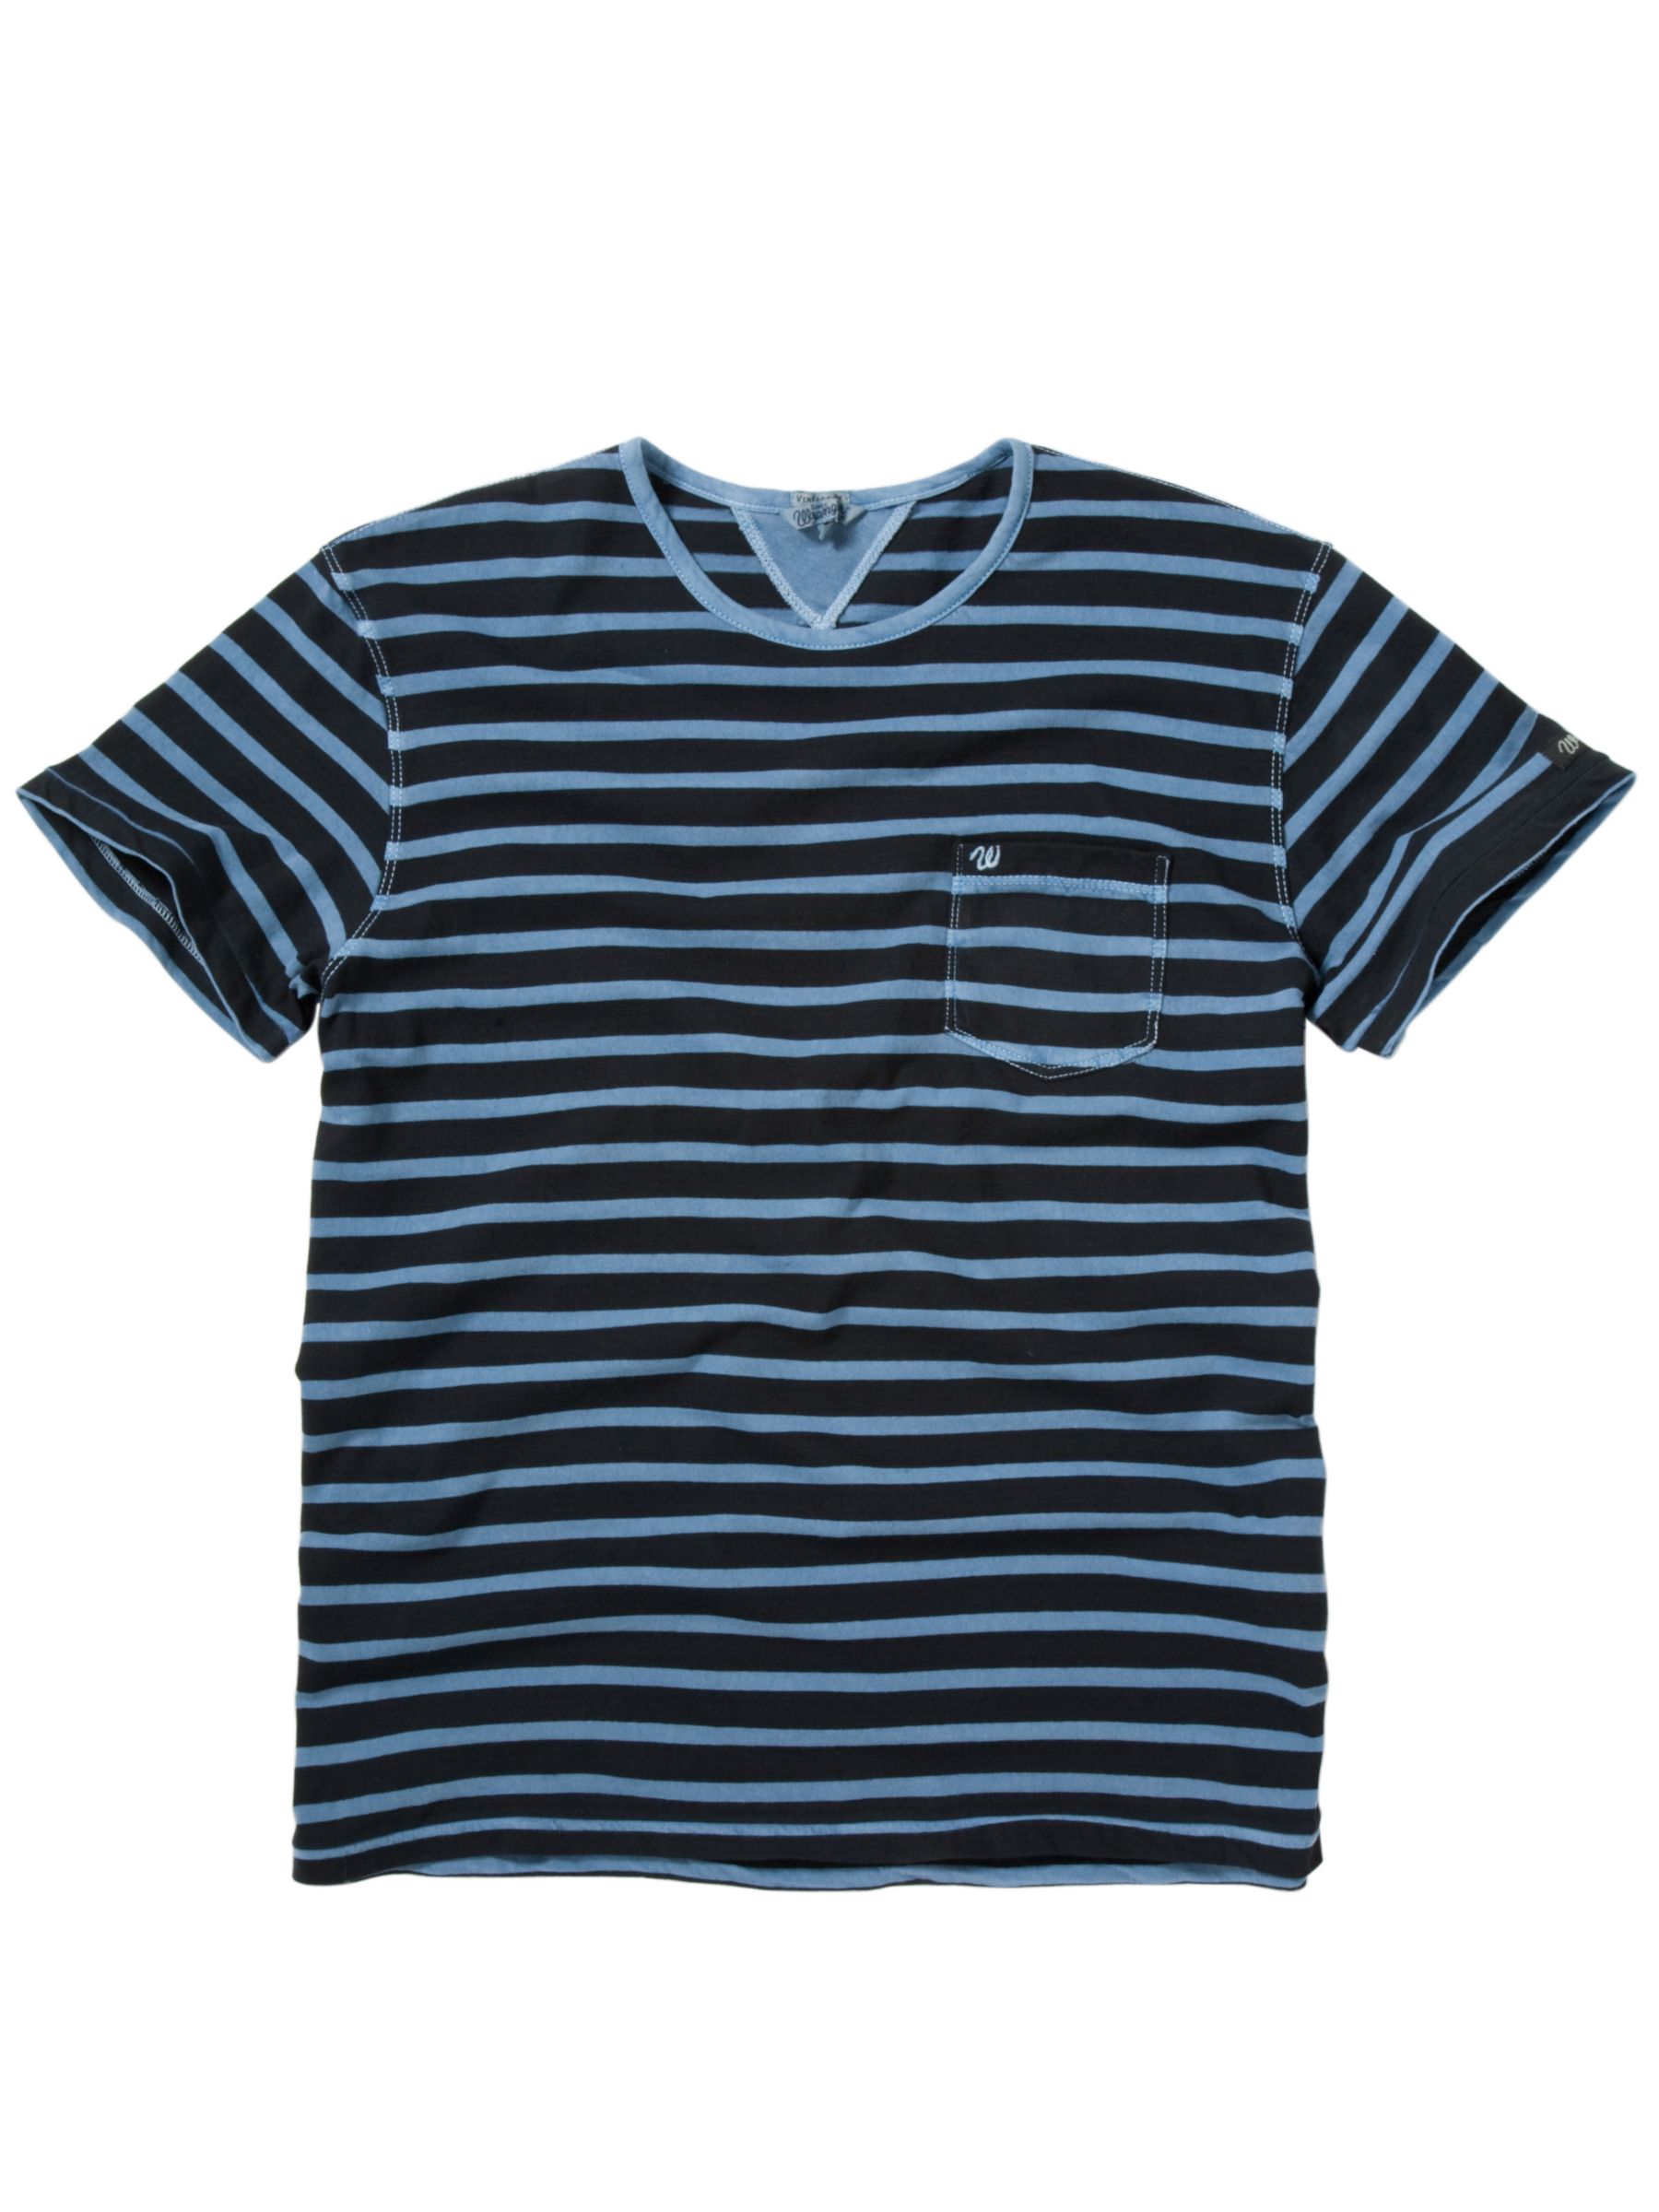 Dean Stripe Short-Sleeve T-Shirt,